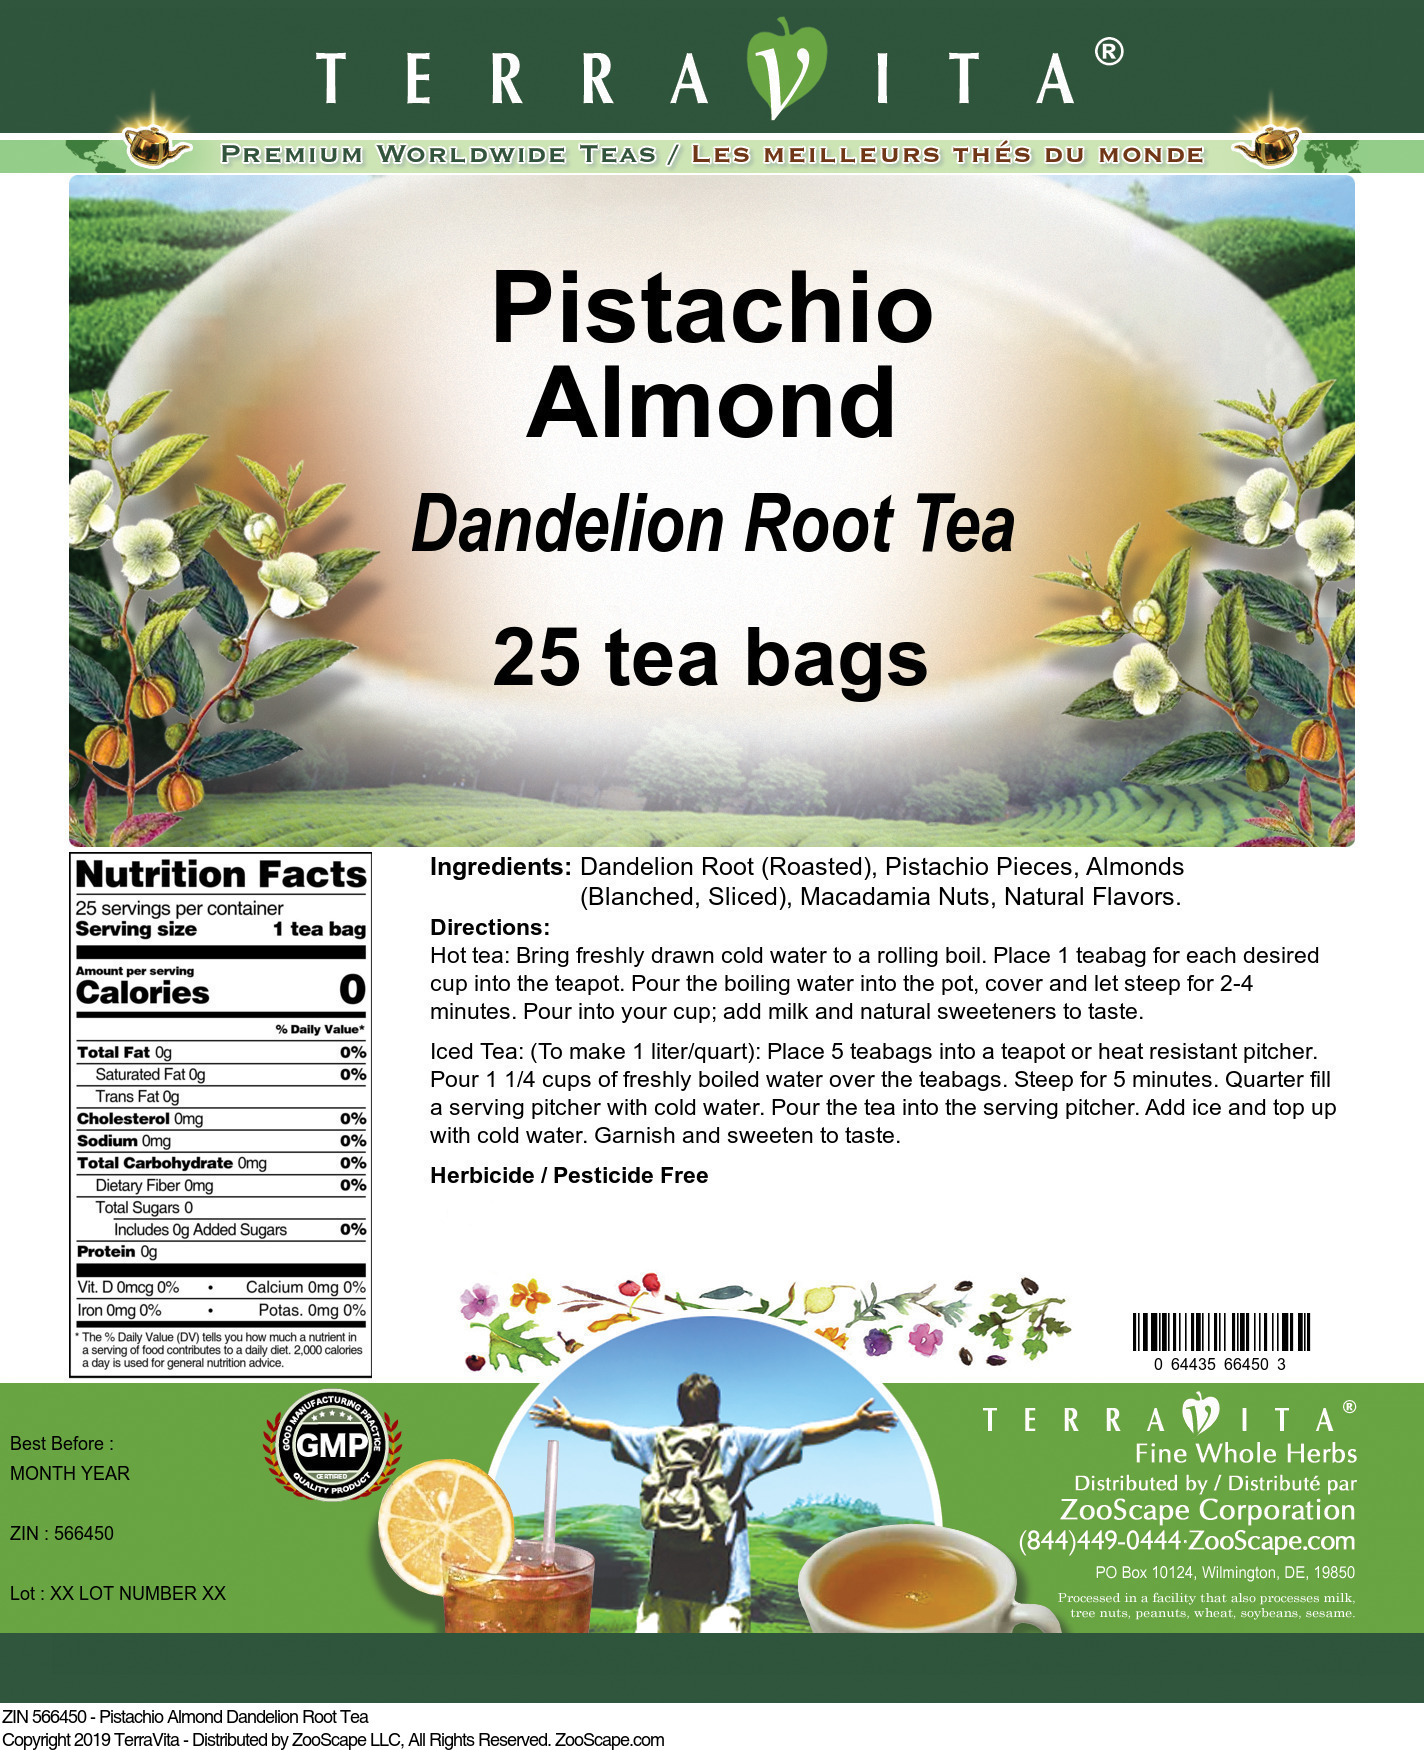 Pistachio Almond Dandelion Root Tea - Label